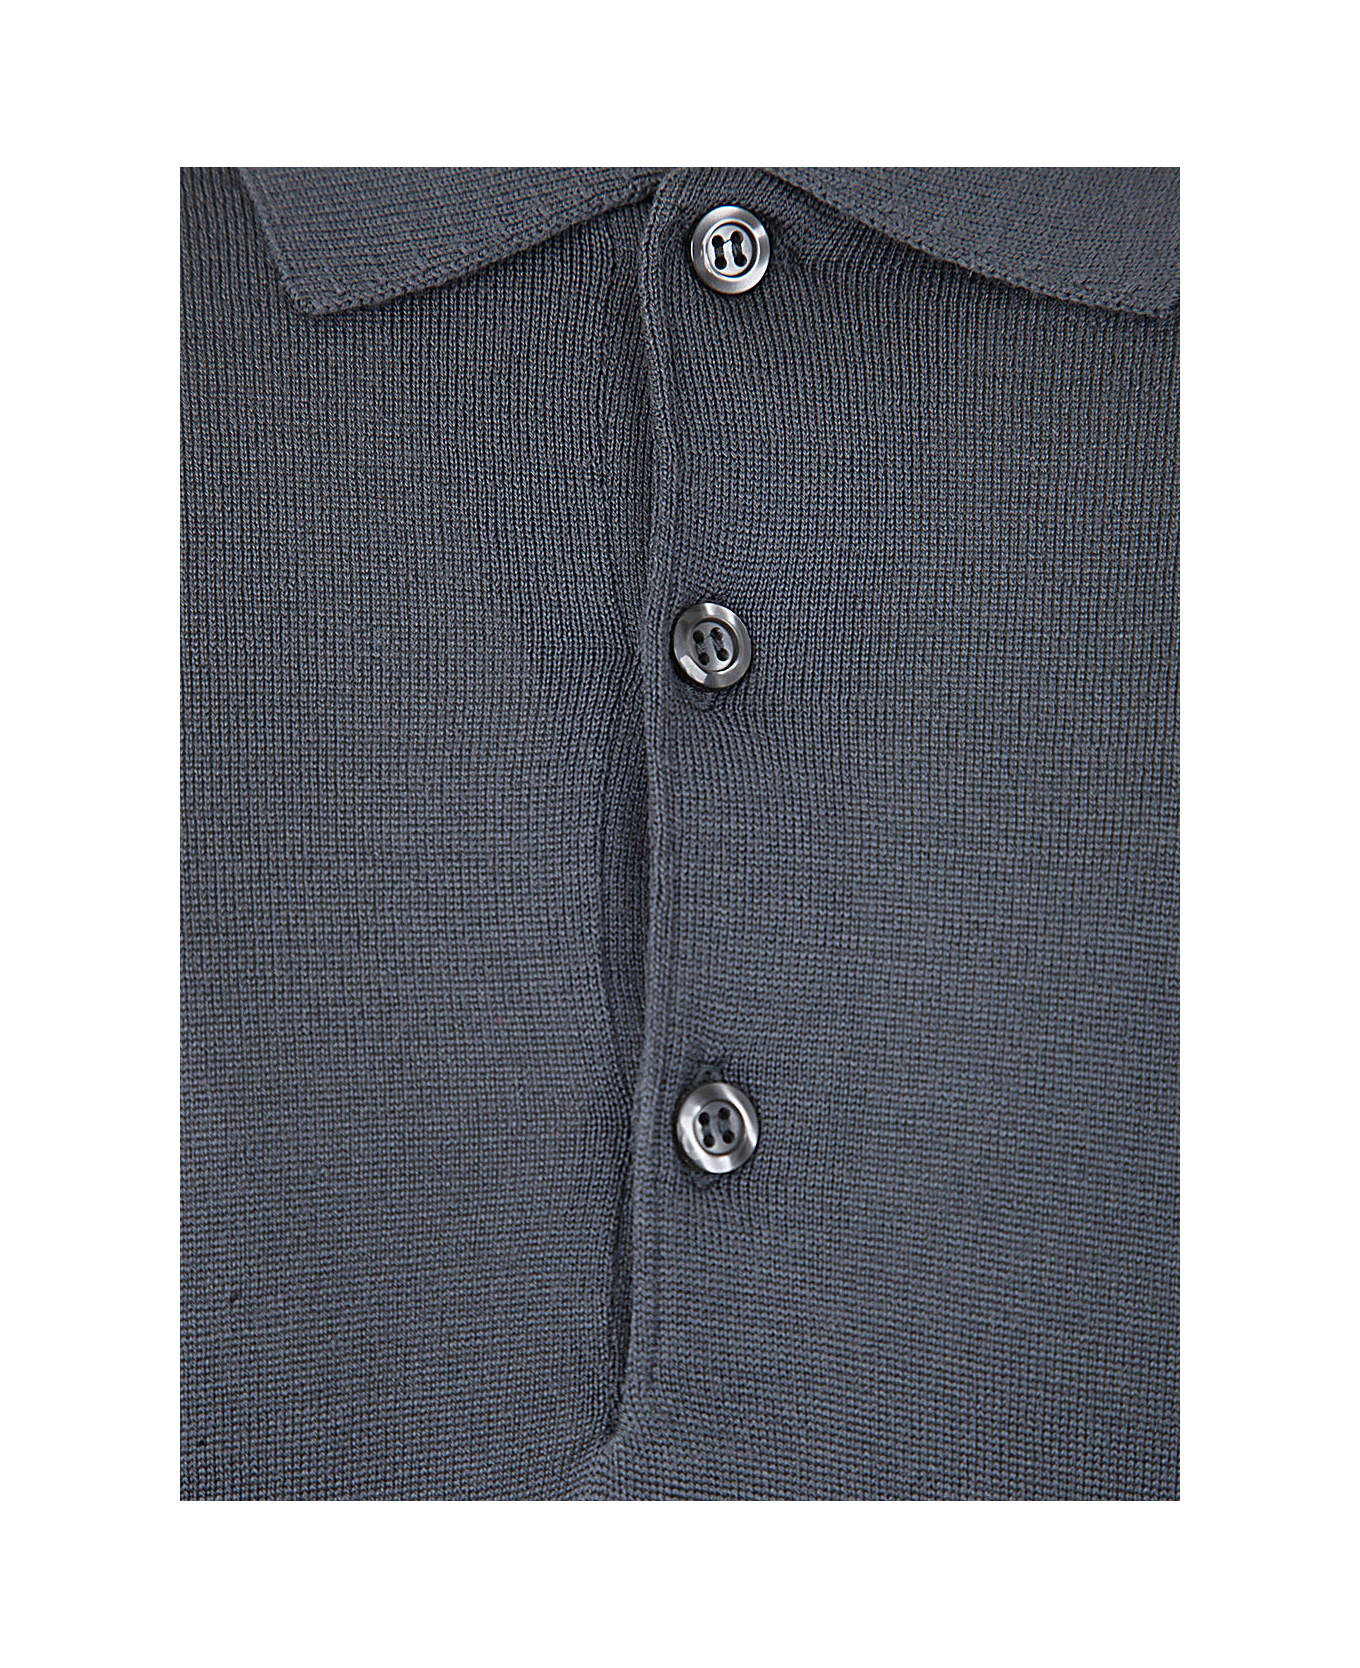 John Smedley Cotswold Long Sleeves Shirt - Slate Grey